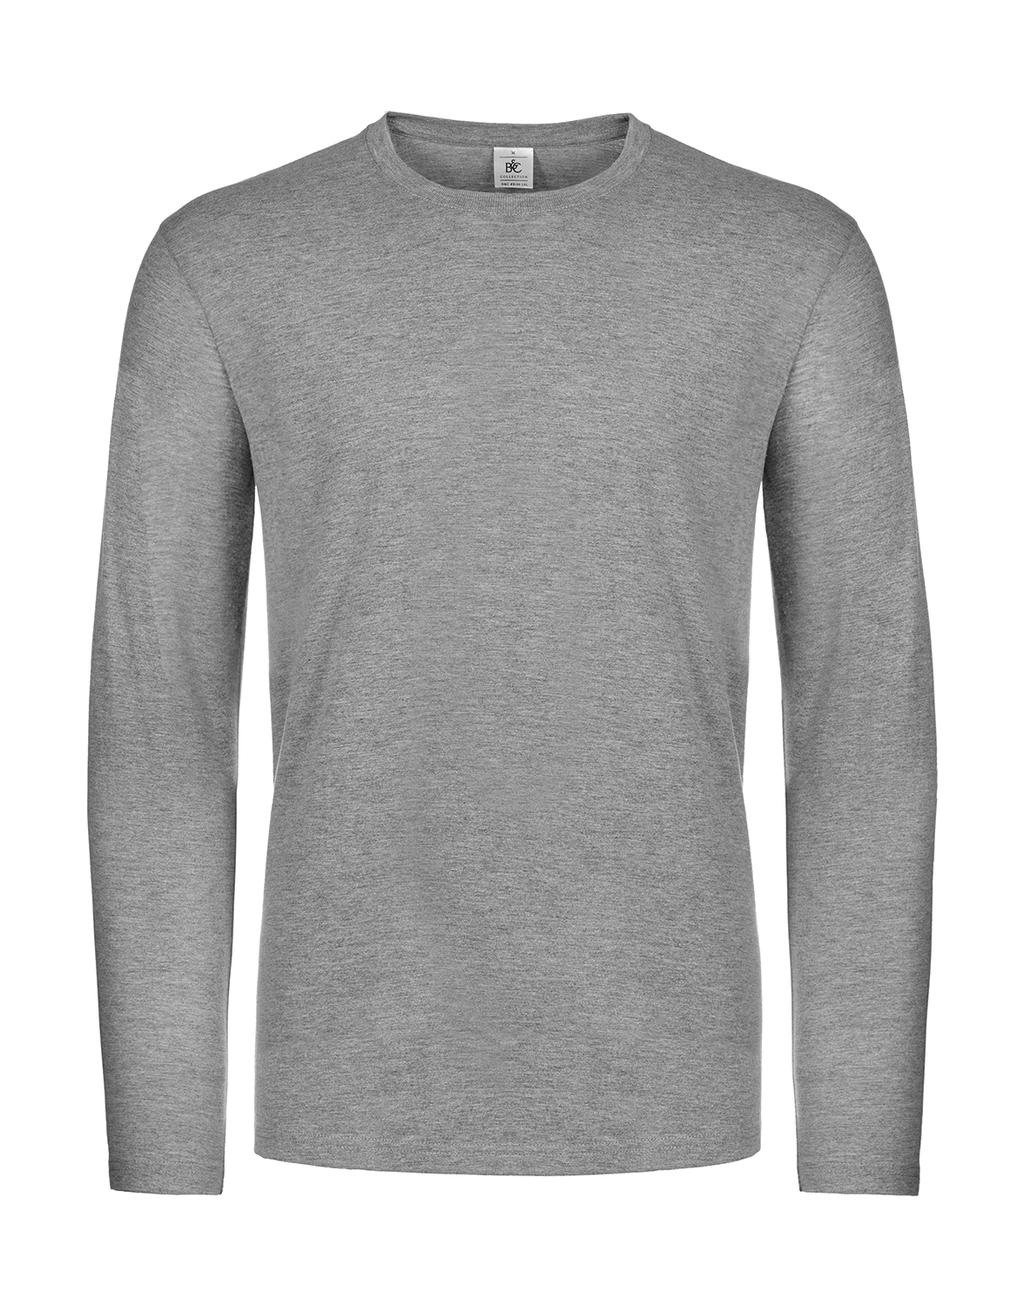 Tričko s dlhými rukávmi #E190 - sport grey